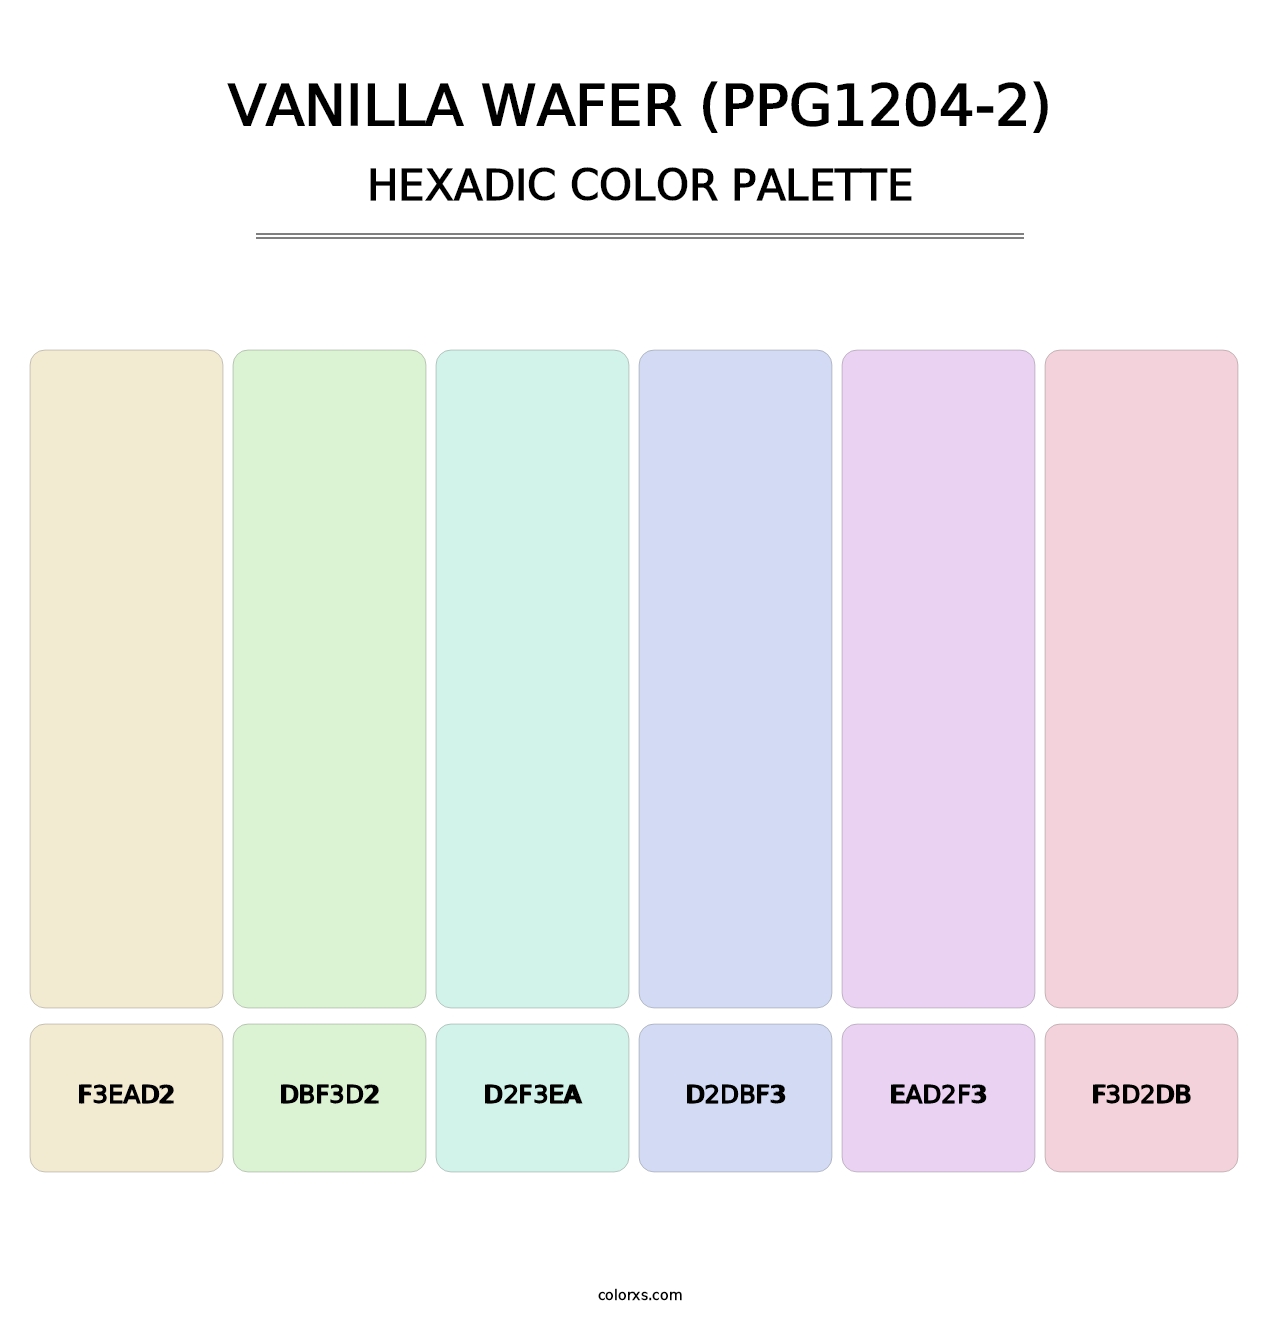 Vanilla Wafer (PPG1204-2) - Hexadic Color Palette